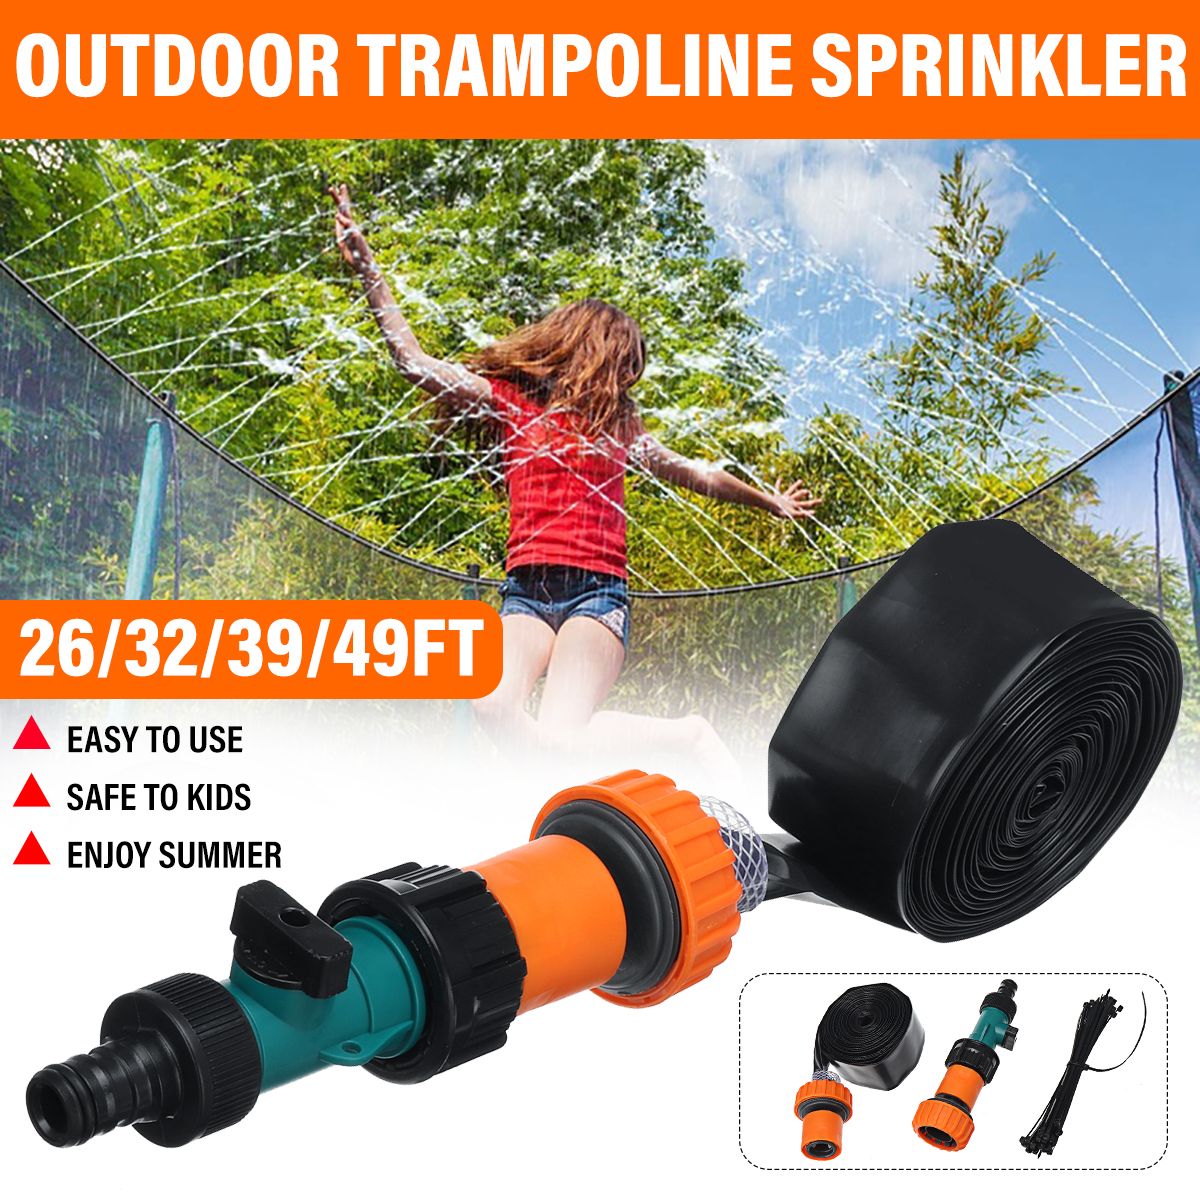 8101215m-Outdoor-Trampoline-Sprinkler-Spray-Hose-Kids-Backyard-Pool-Playing-1713667